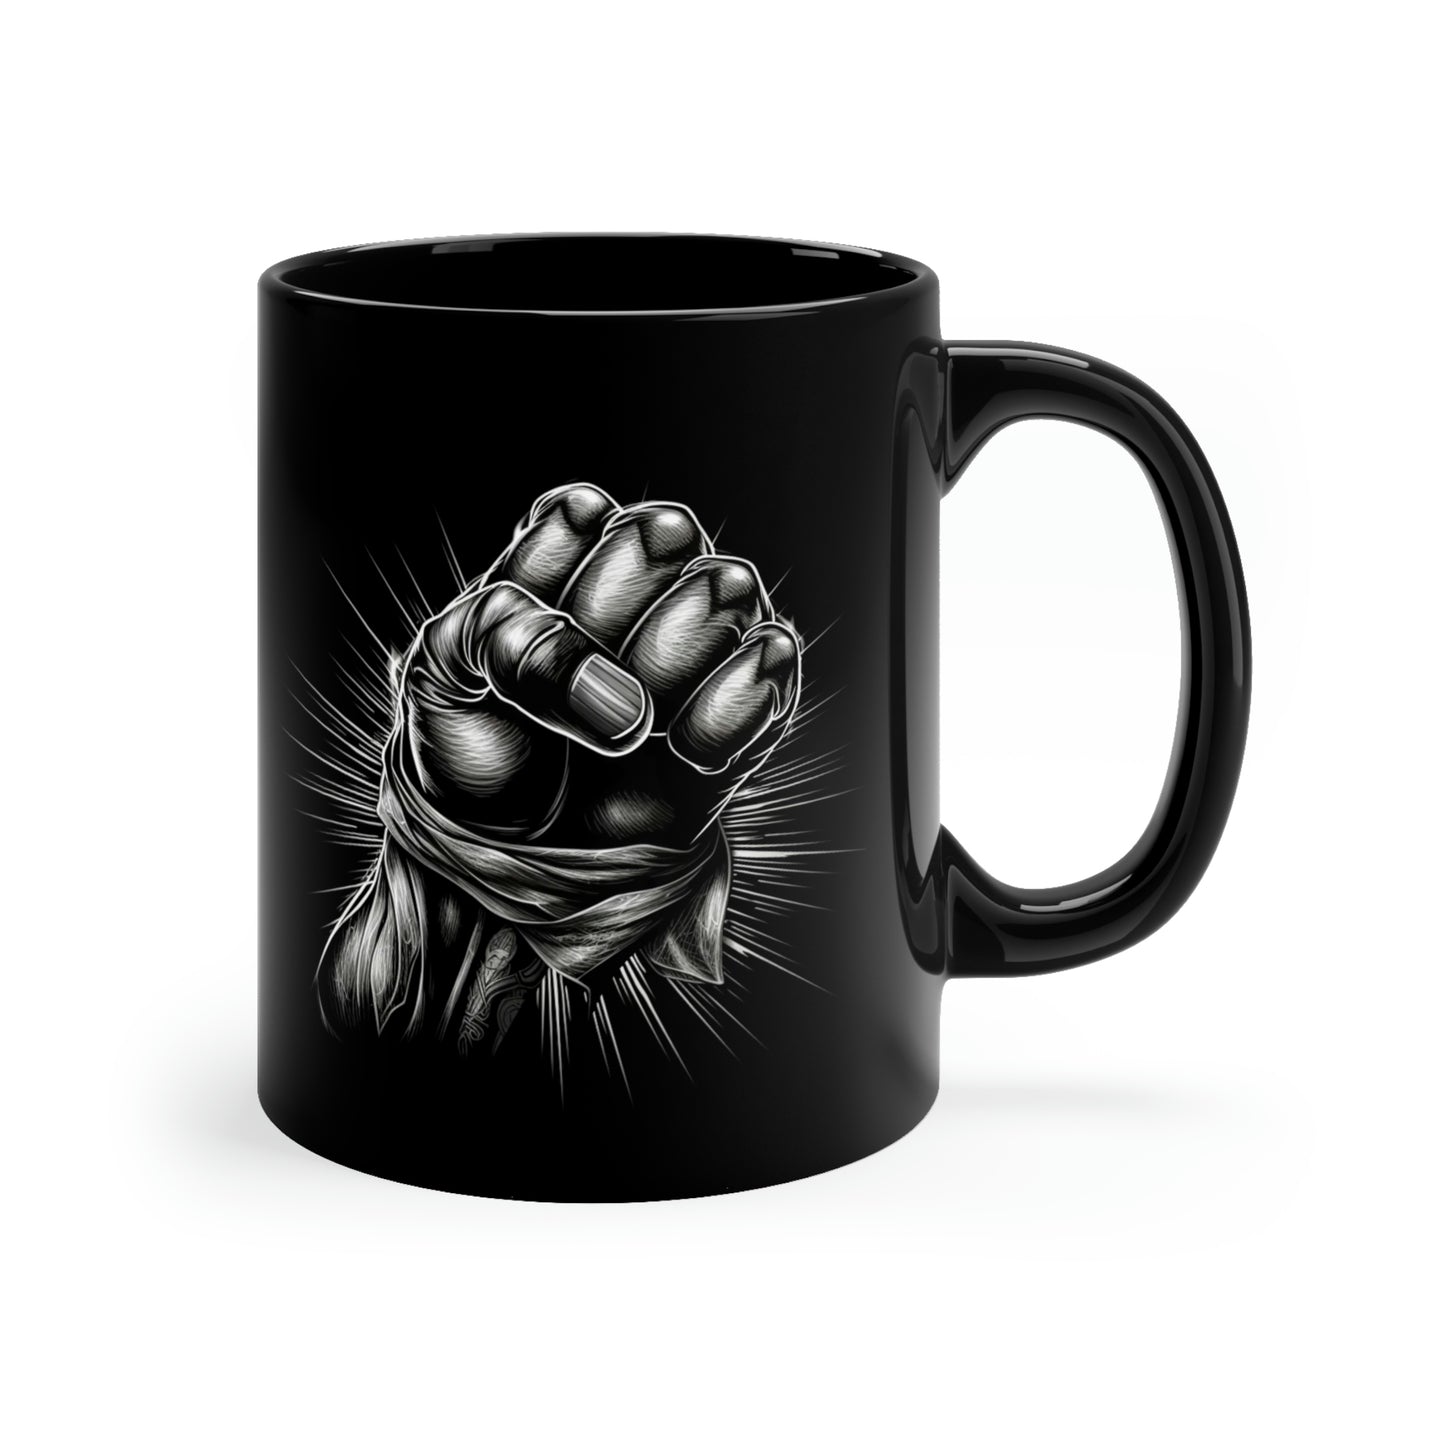 Furious Fist - Novelty 11oz Black Mug